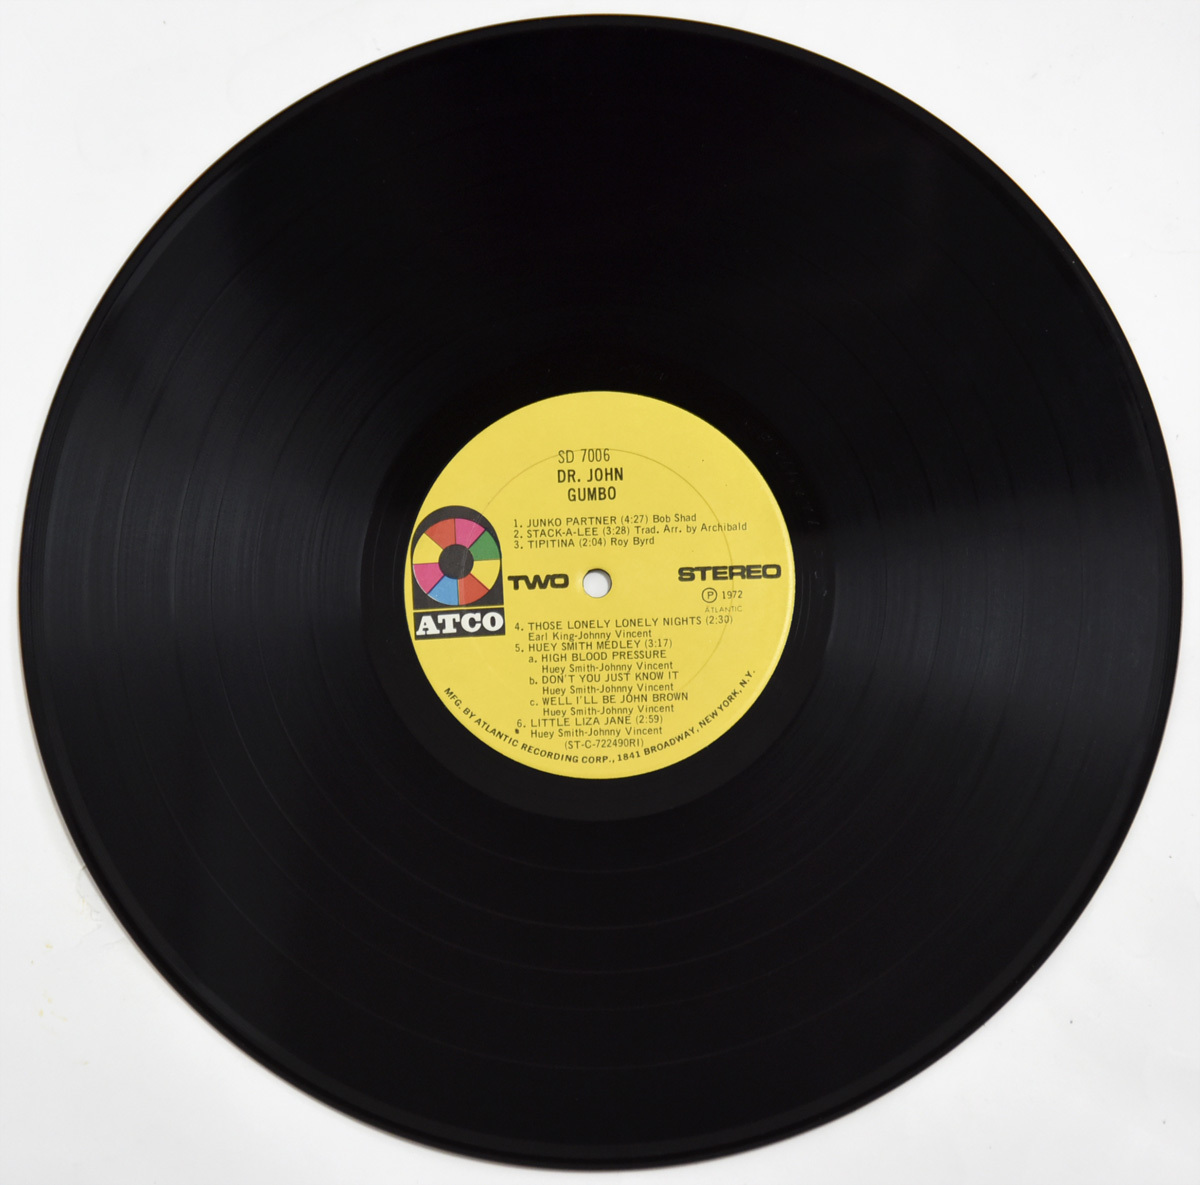 USオリジナル盤 Dr. John / Dr. John's Gumbo / ATCO Records 試聴可 SD 7006 LPレコード 『Iko Iko』収録の画像5